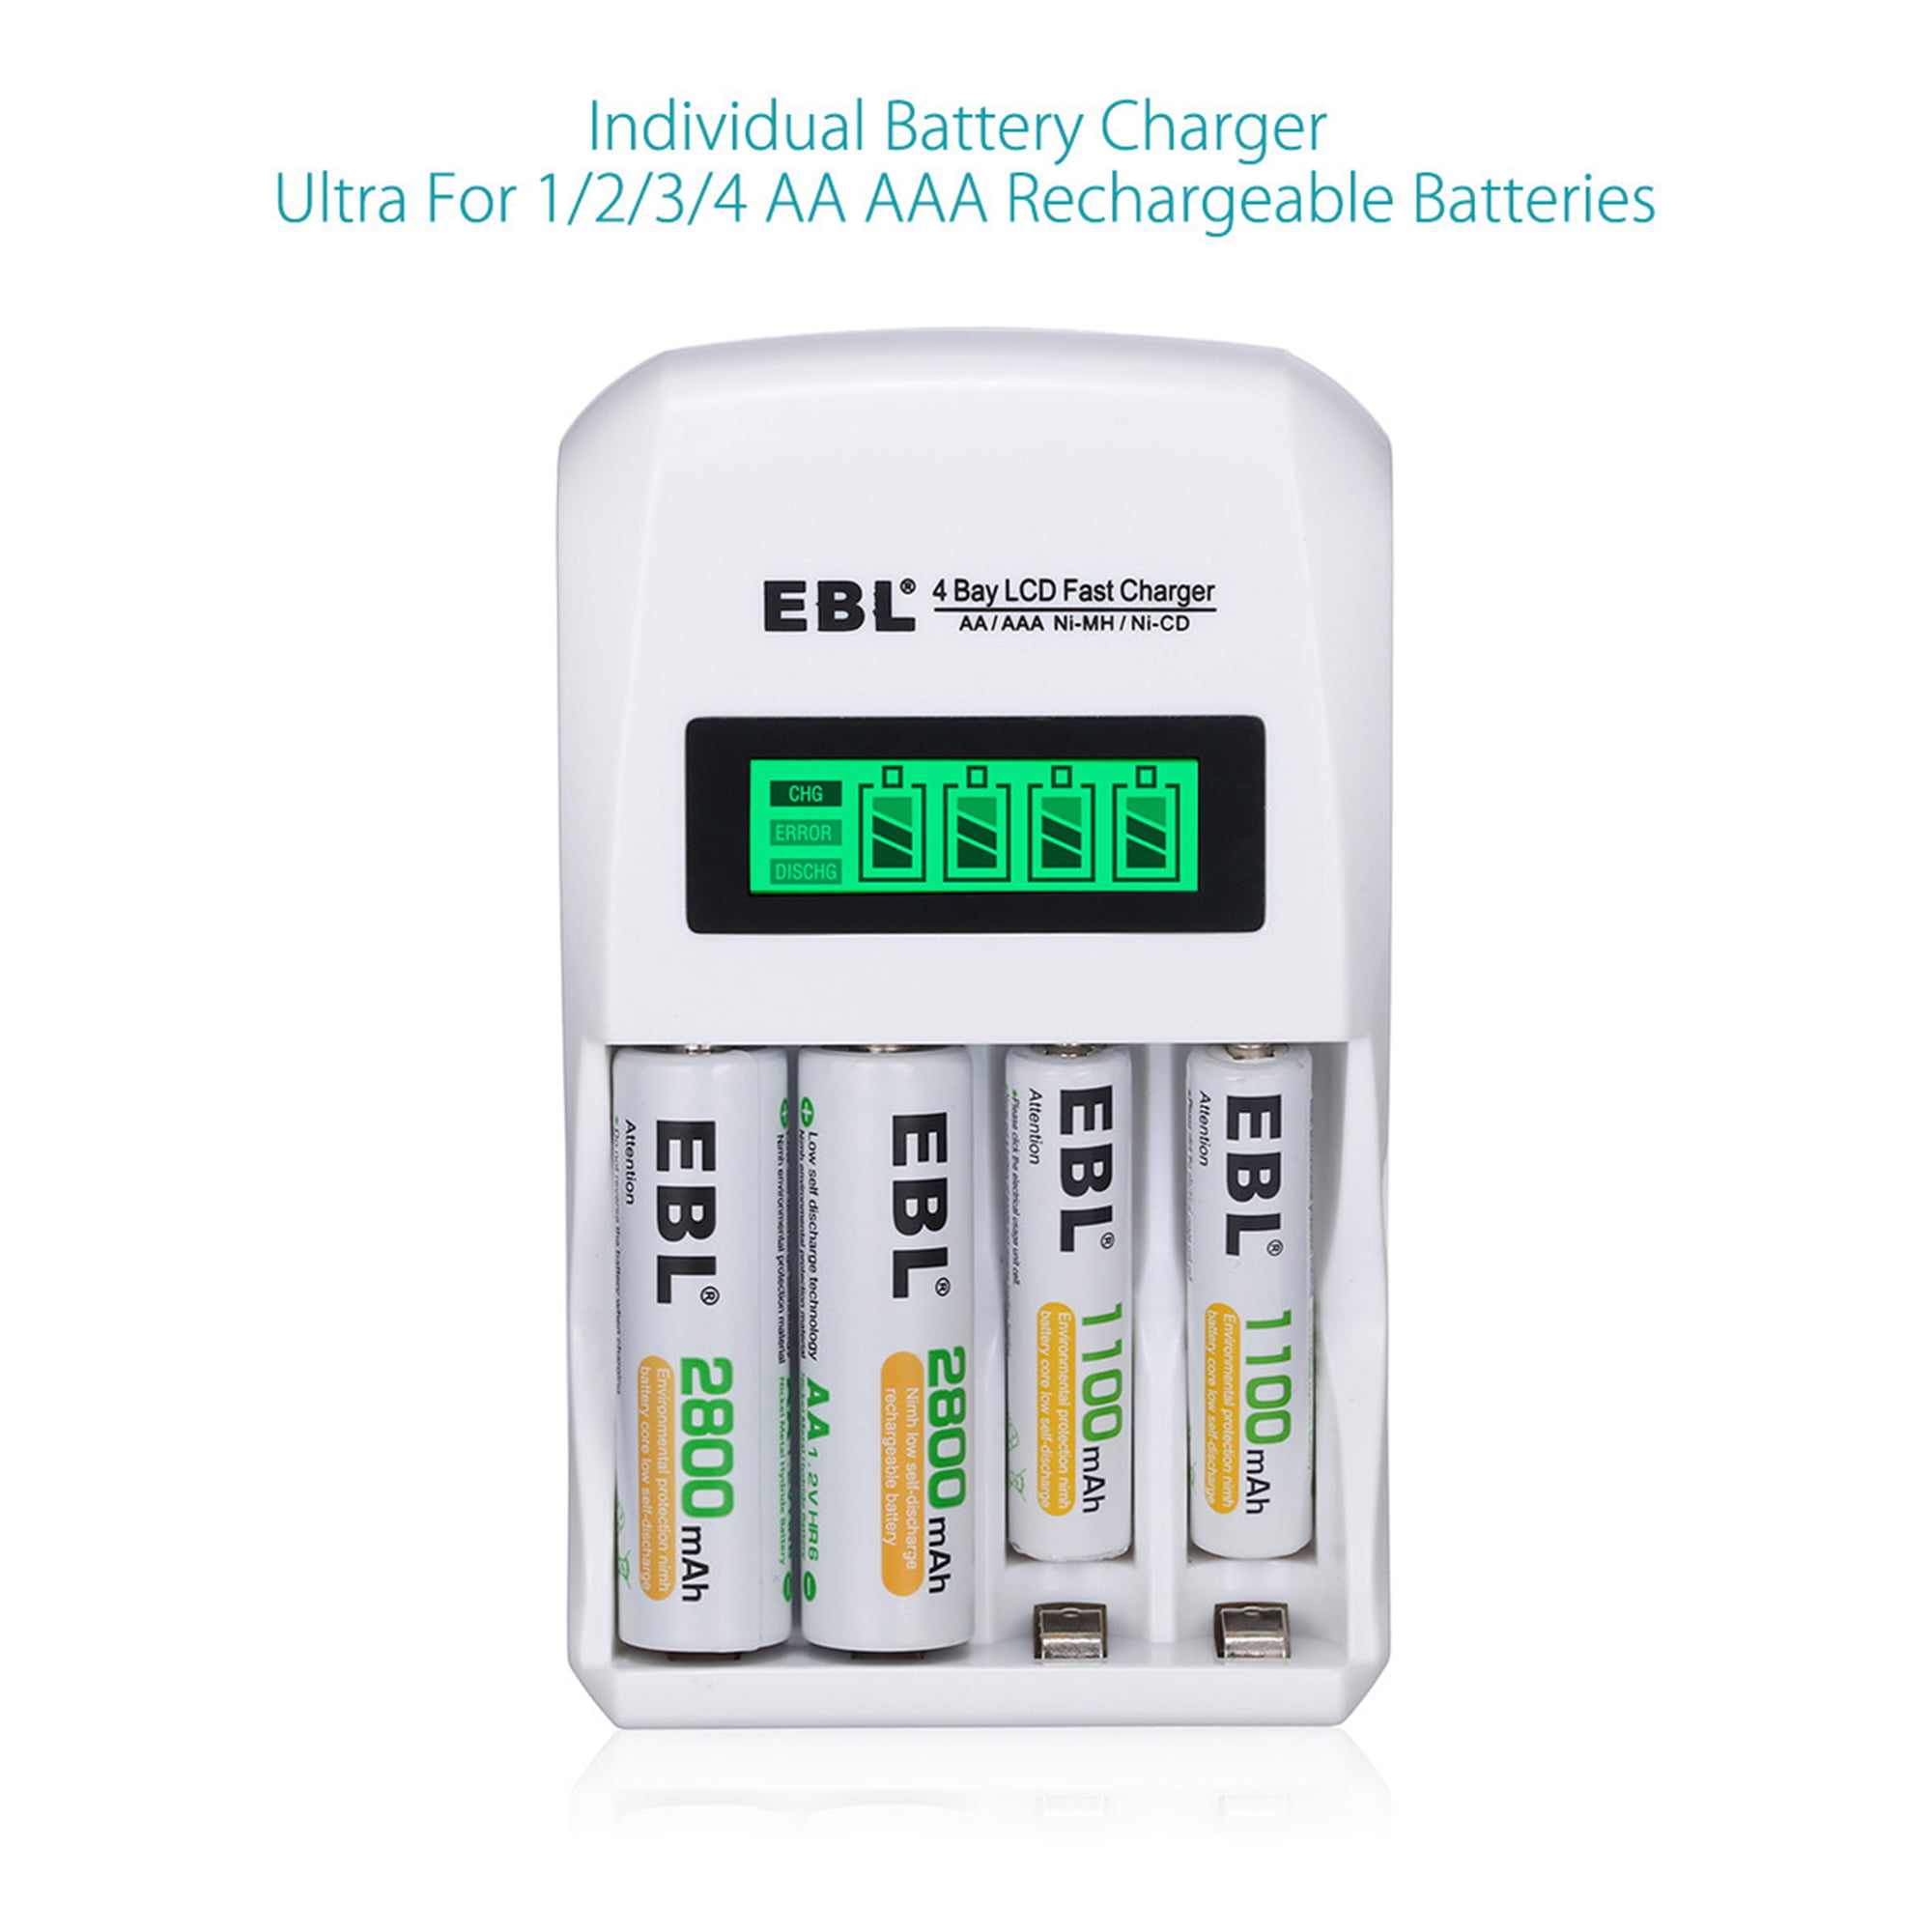 Hectare Uitbreiden maximaliseren EBL Smart LCD Battery Charger for AA AAA Ni-MH Ni-CD Rechargeable Batteries  - Walmart.com